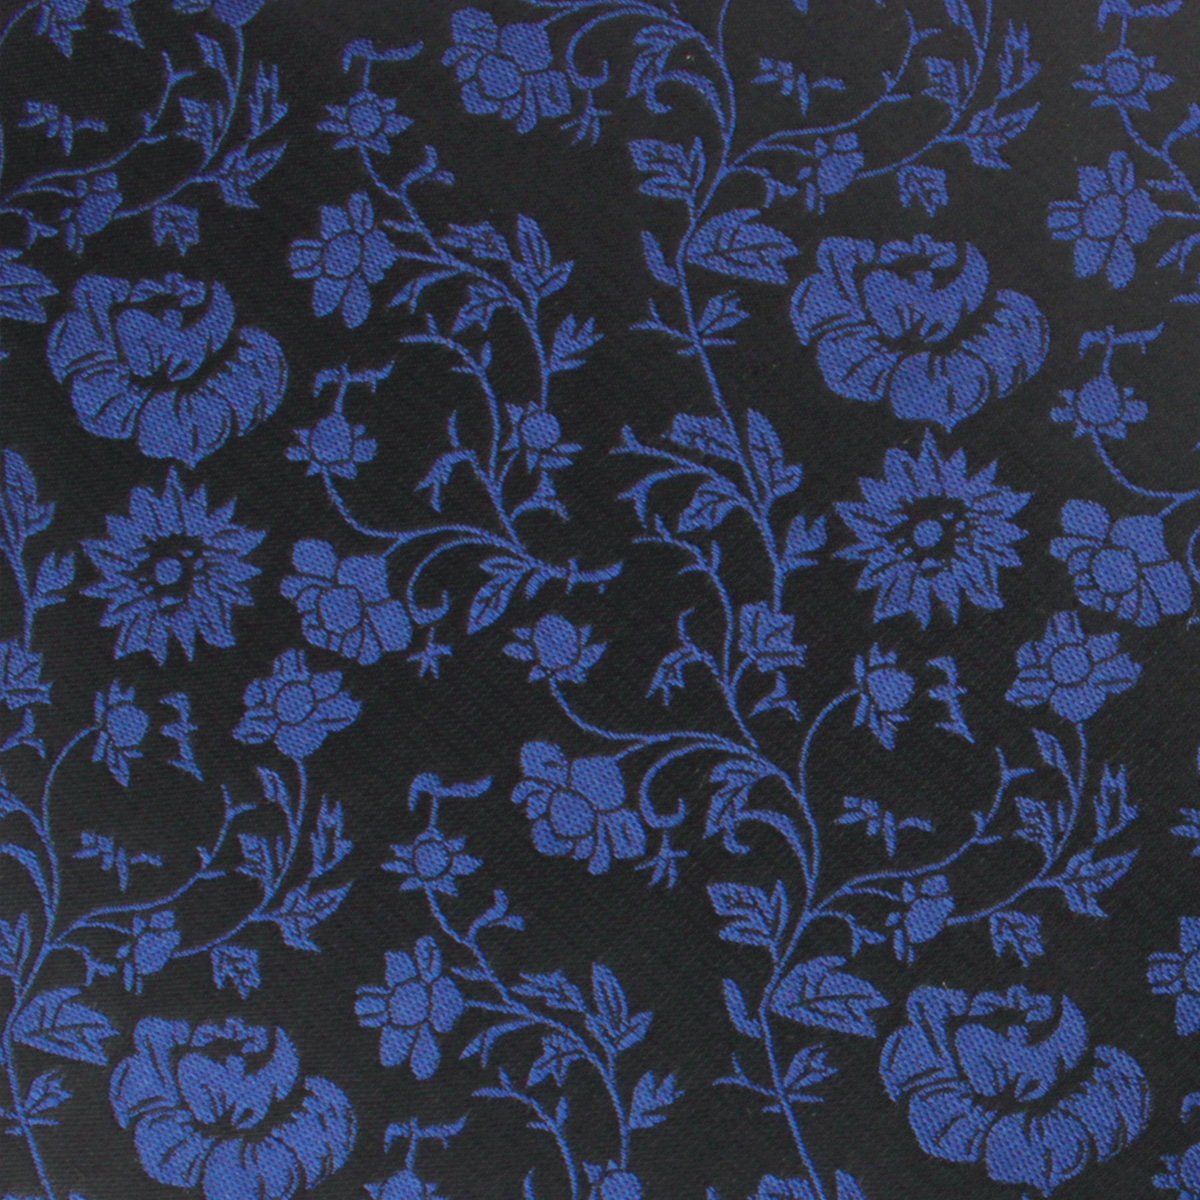 Black on Navy Blue Vine Floral Skinny Tie Fabric